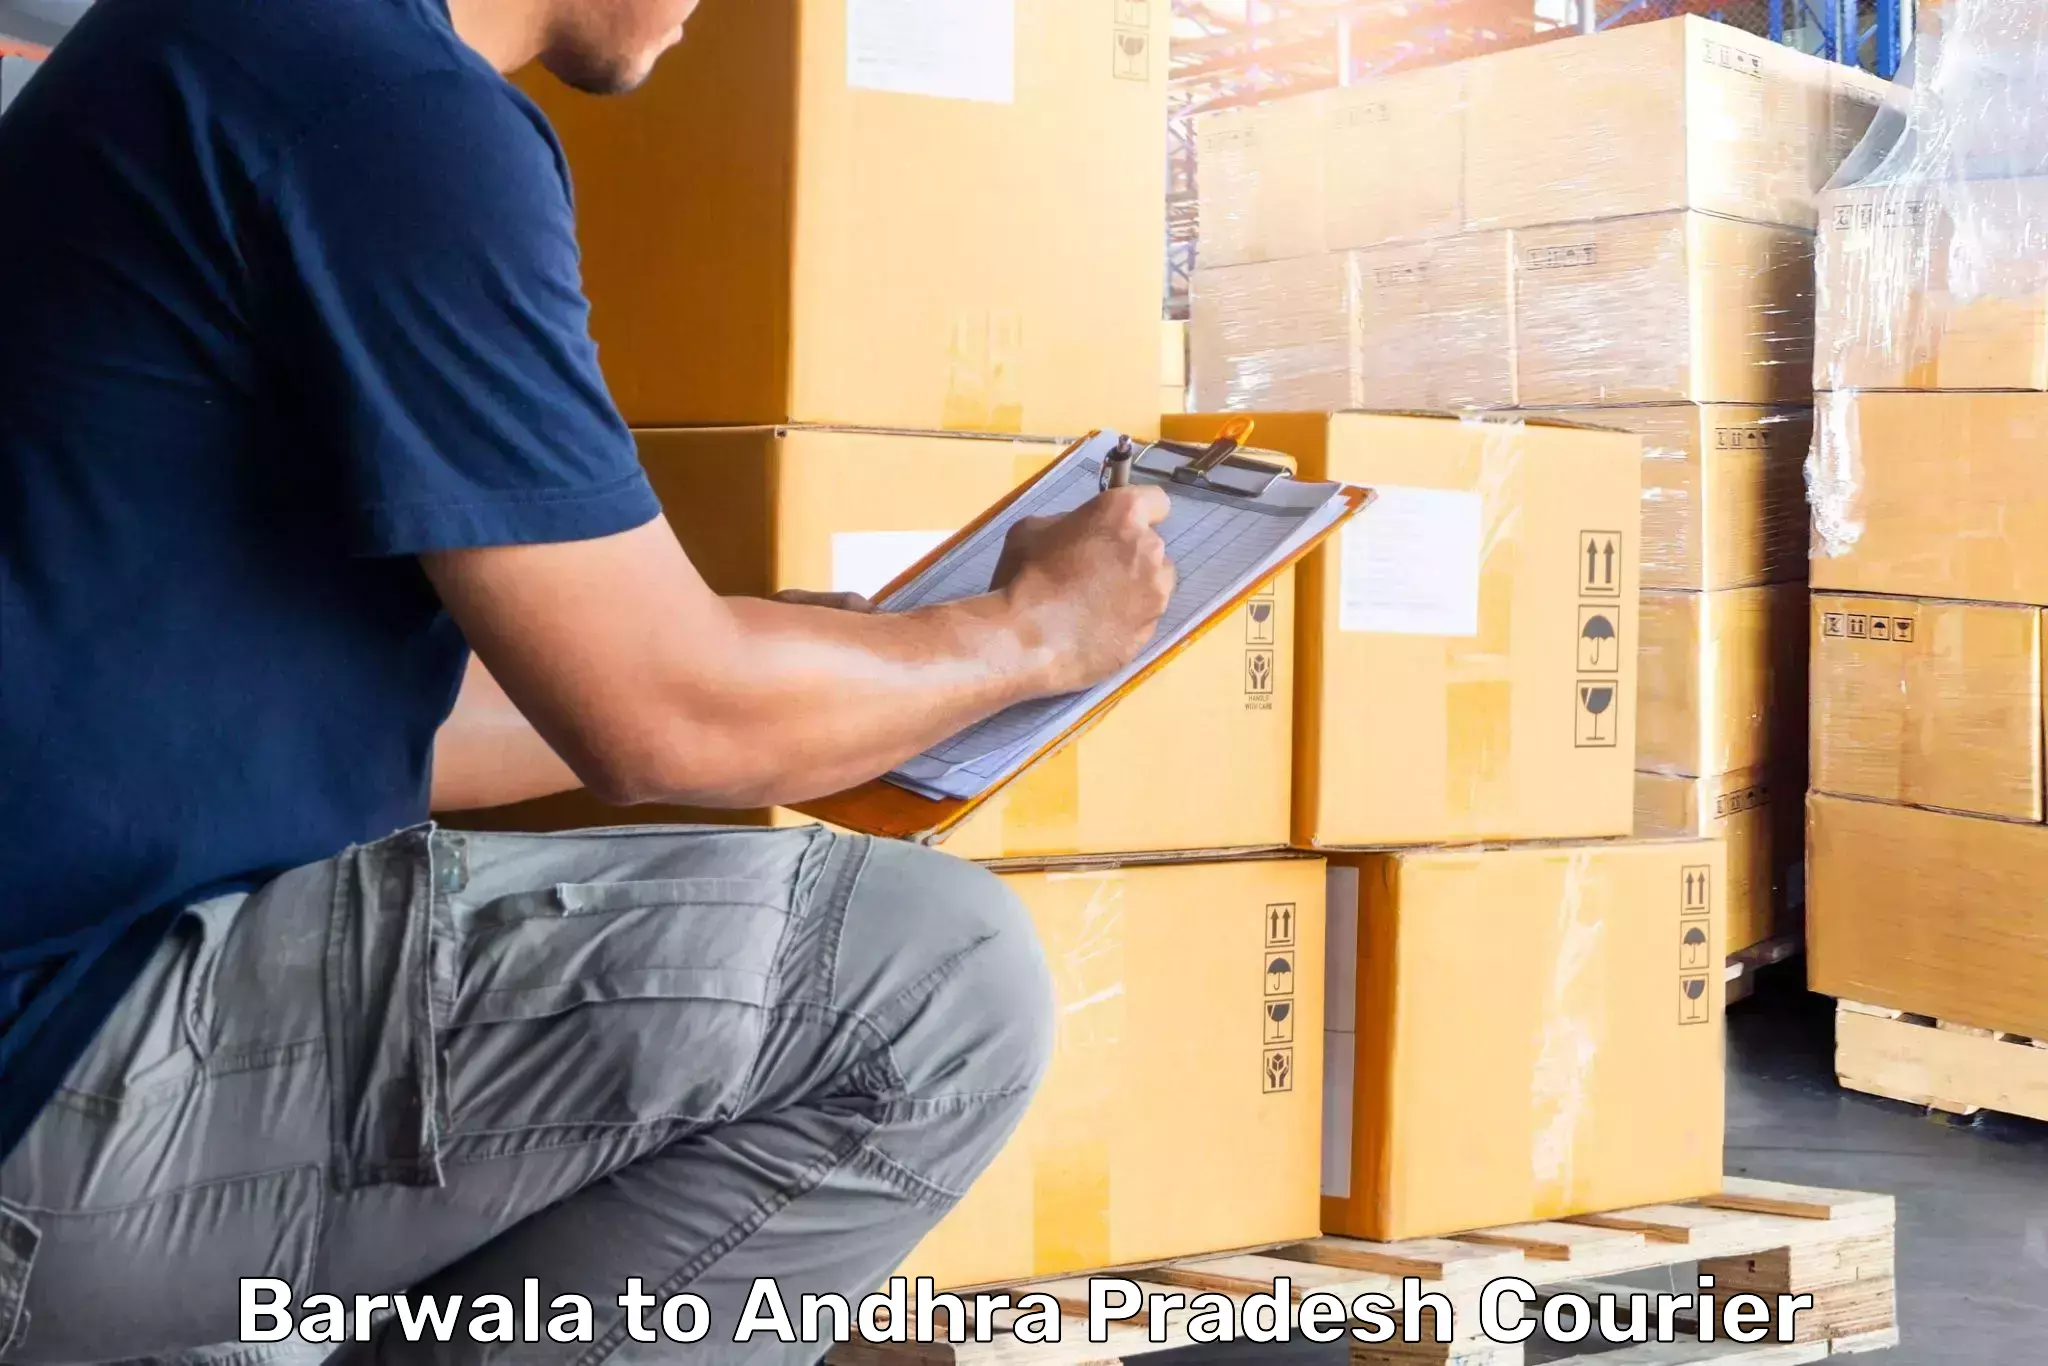 Luggage shipment specialists Barwala to Samarlakota